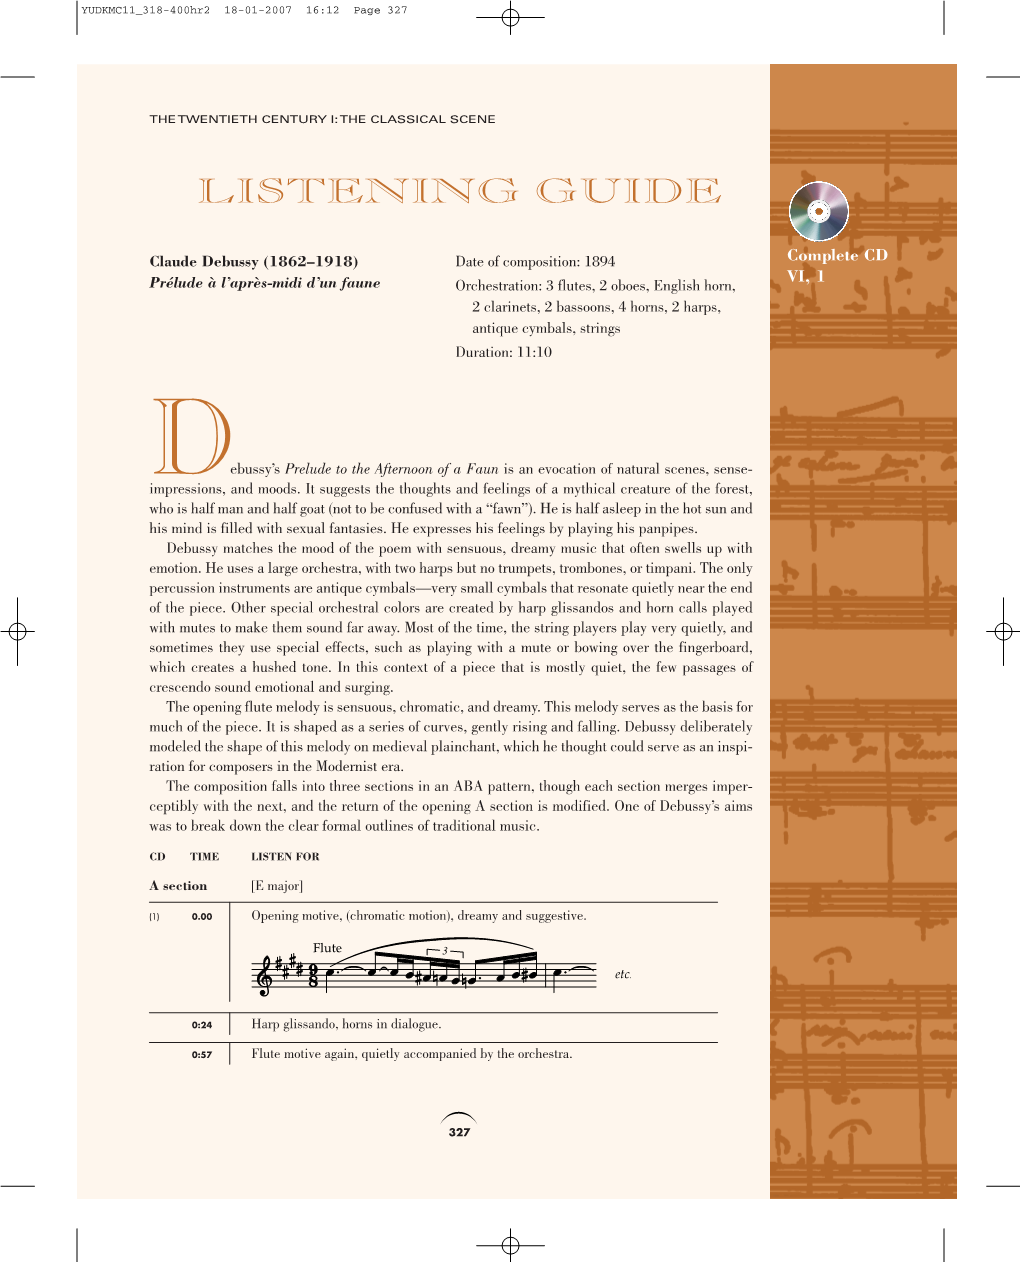 Listening Guide